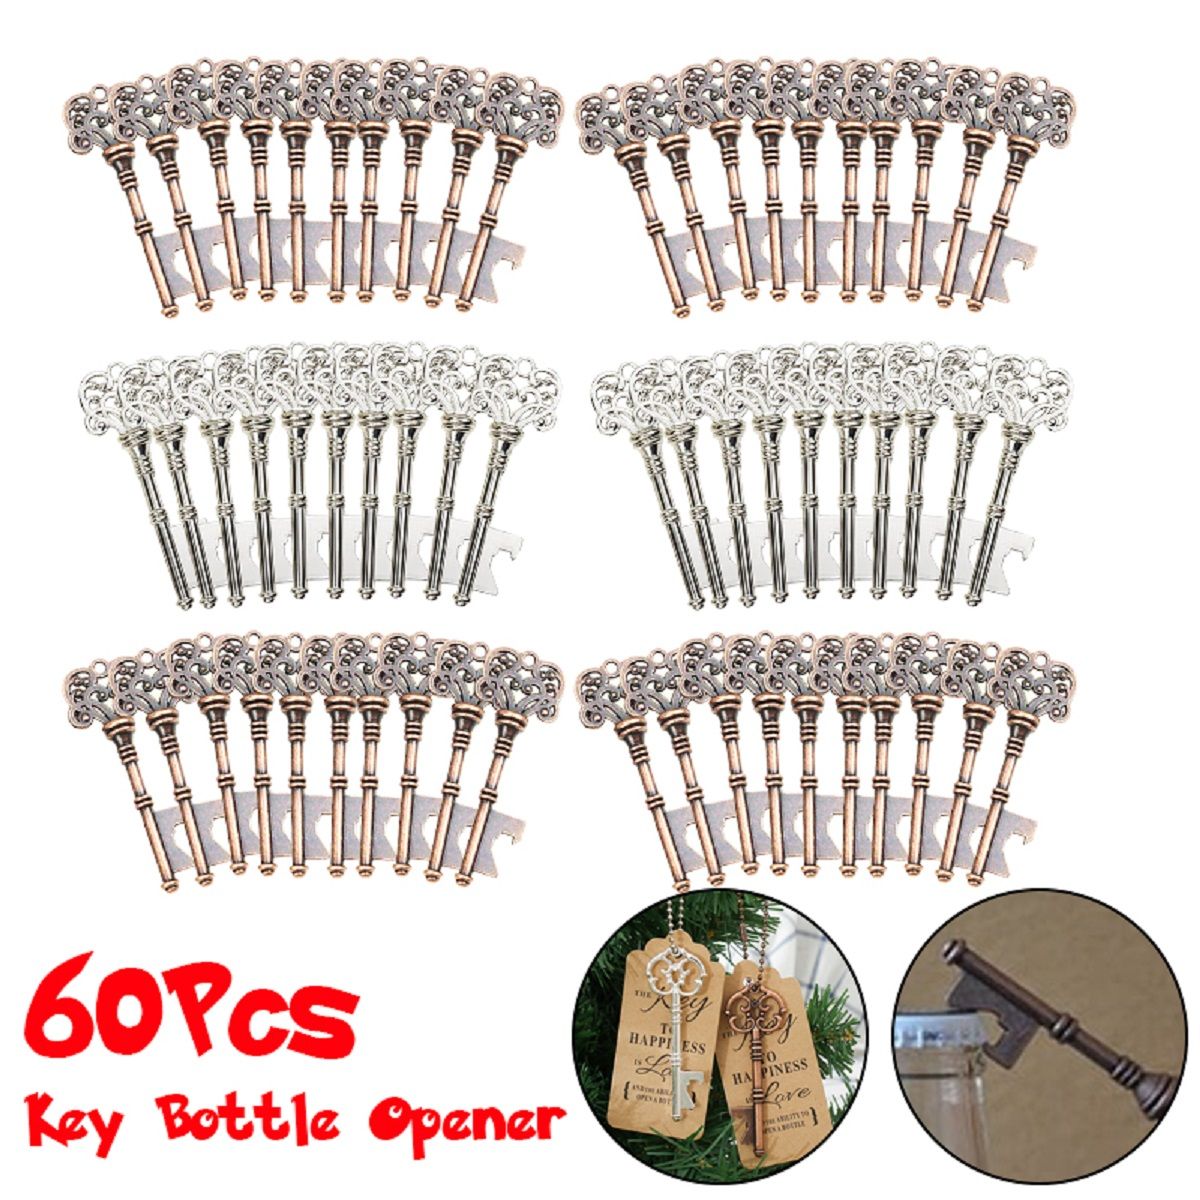 60-Pcs-Heavy-Duty-Metal-Skeleton-Key-Bottle-Opener-Wedding-Favor-Decoration-with-Escort-Tag-Card-1730867